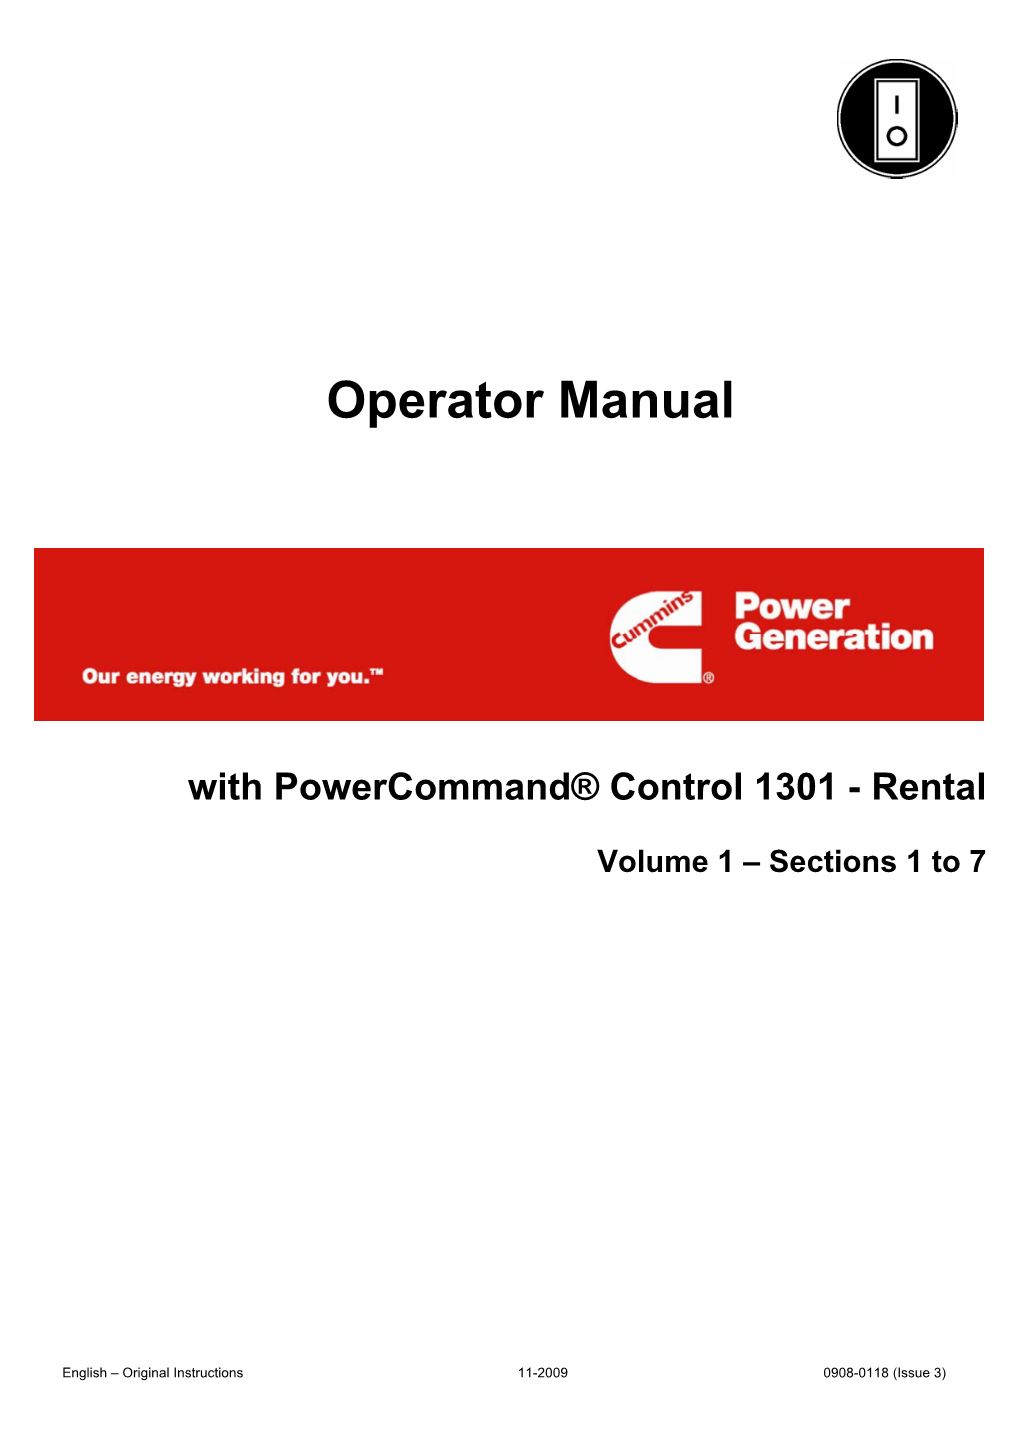 908-0118 Cummins Power Command Control 1301 Rental Manual